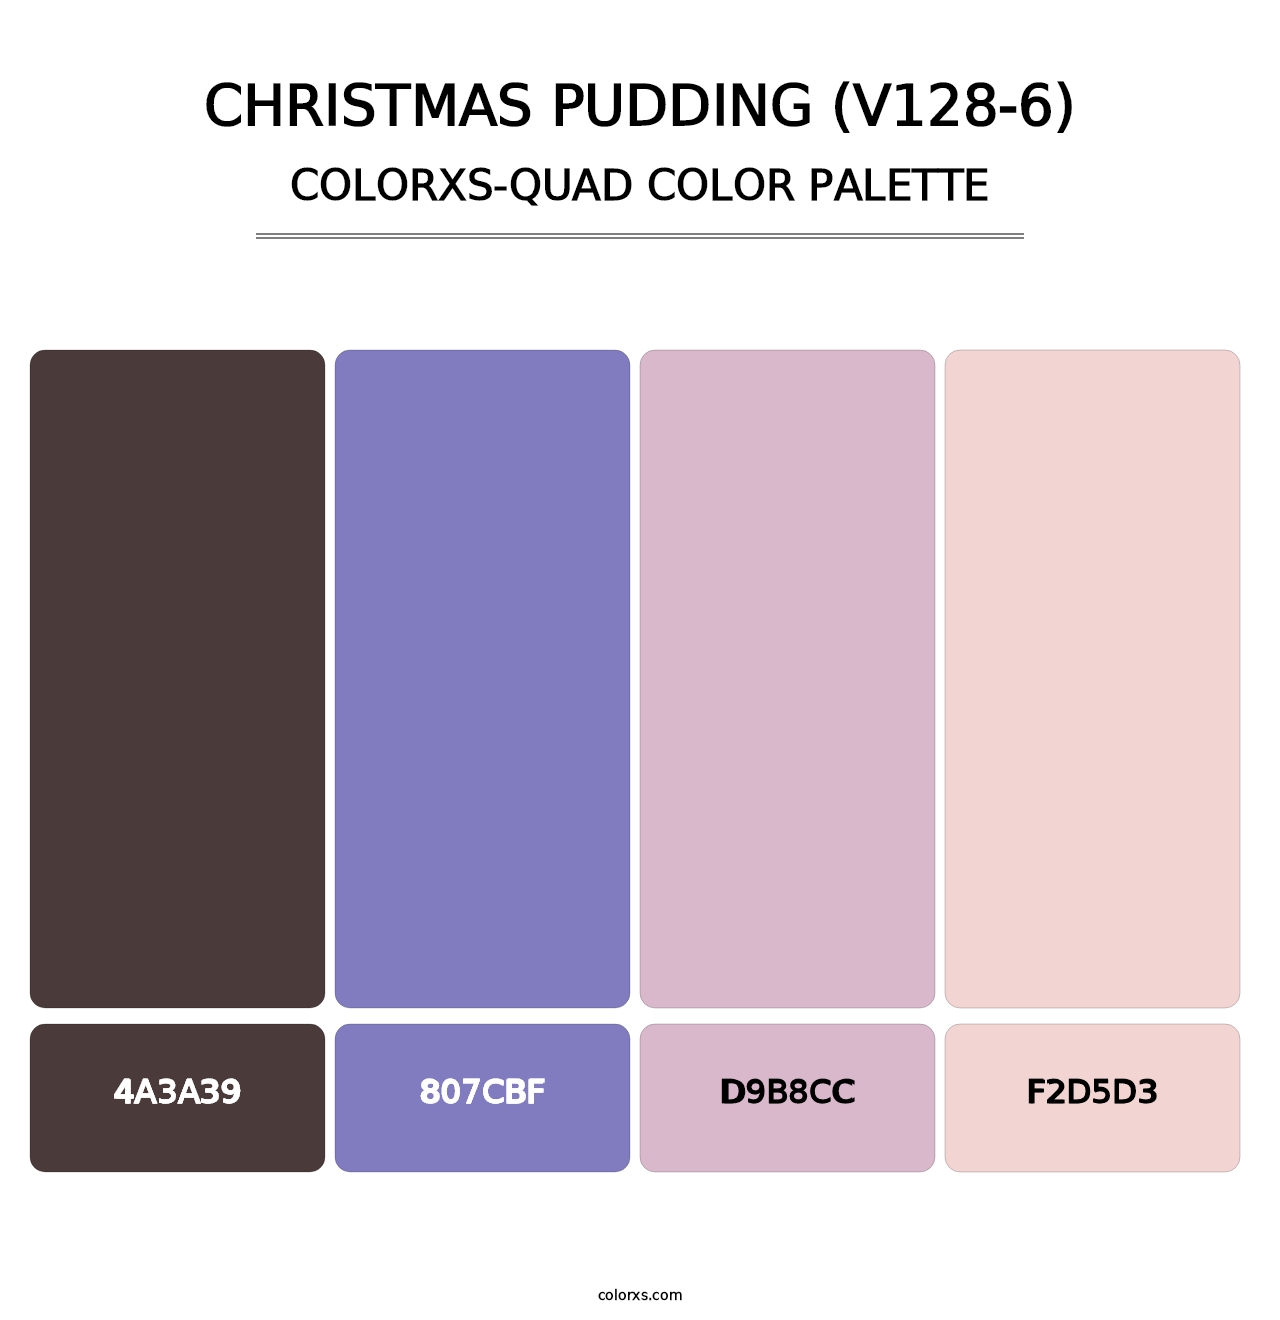 Christmas Pudding (V128-6) - Colorxs Quad Palette